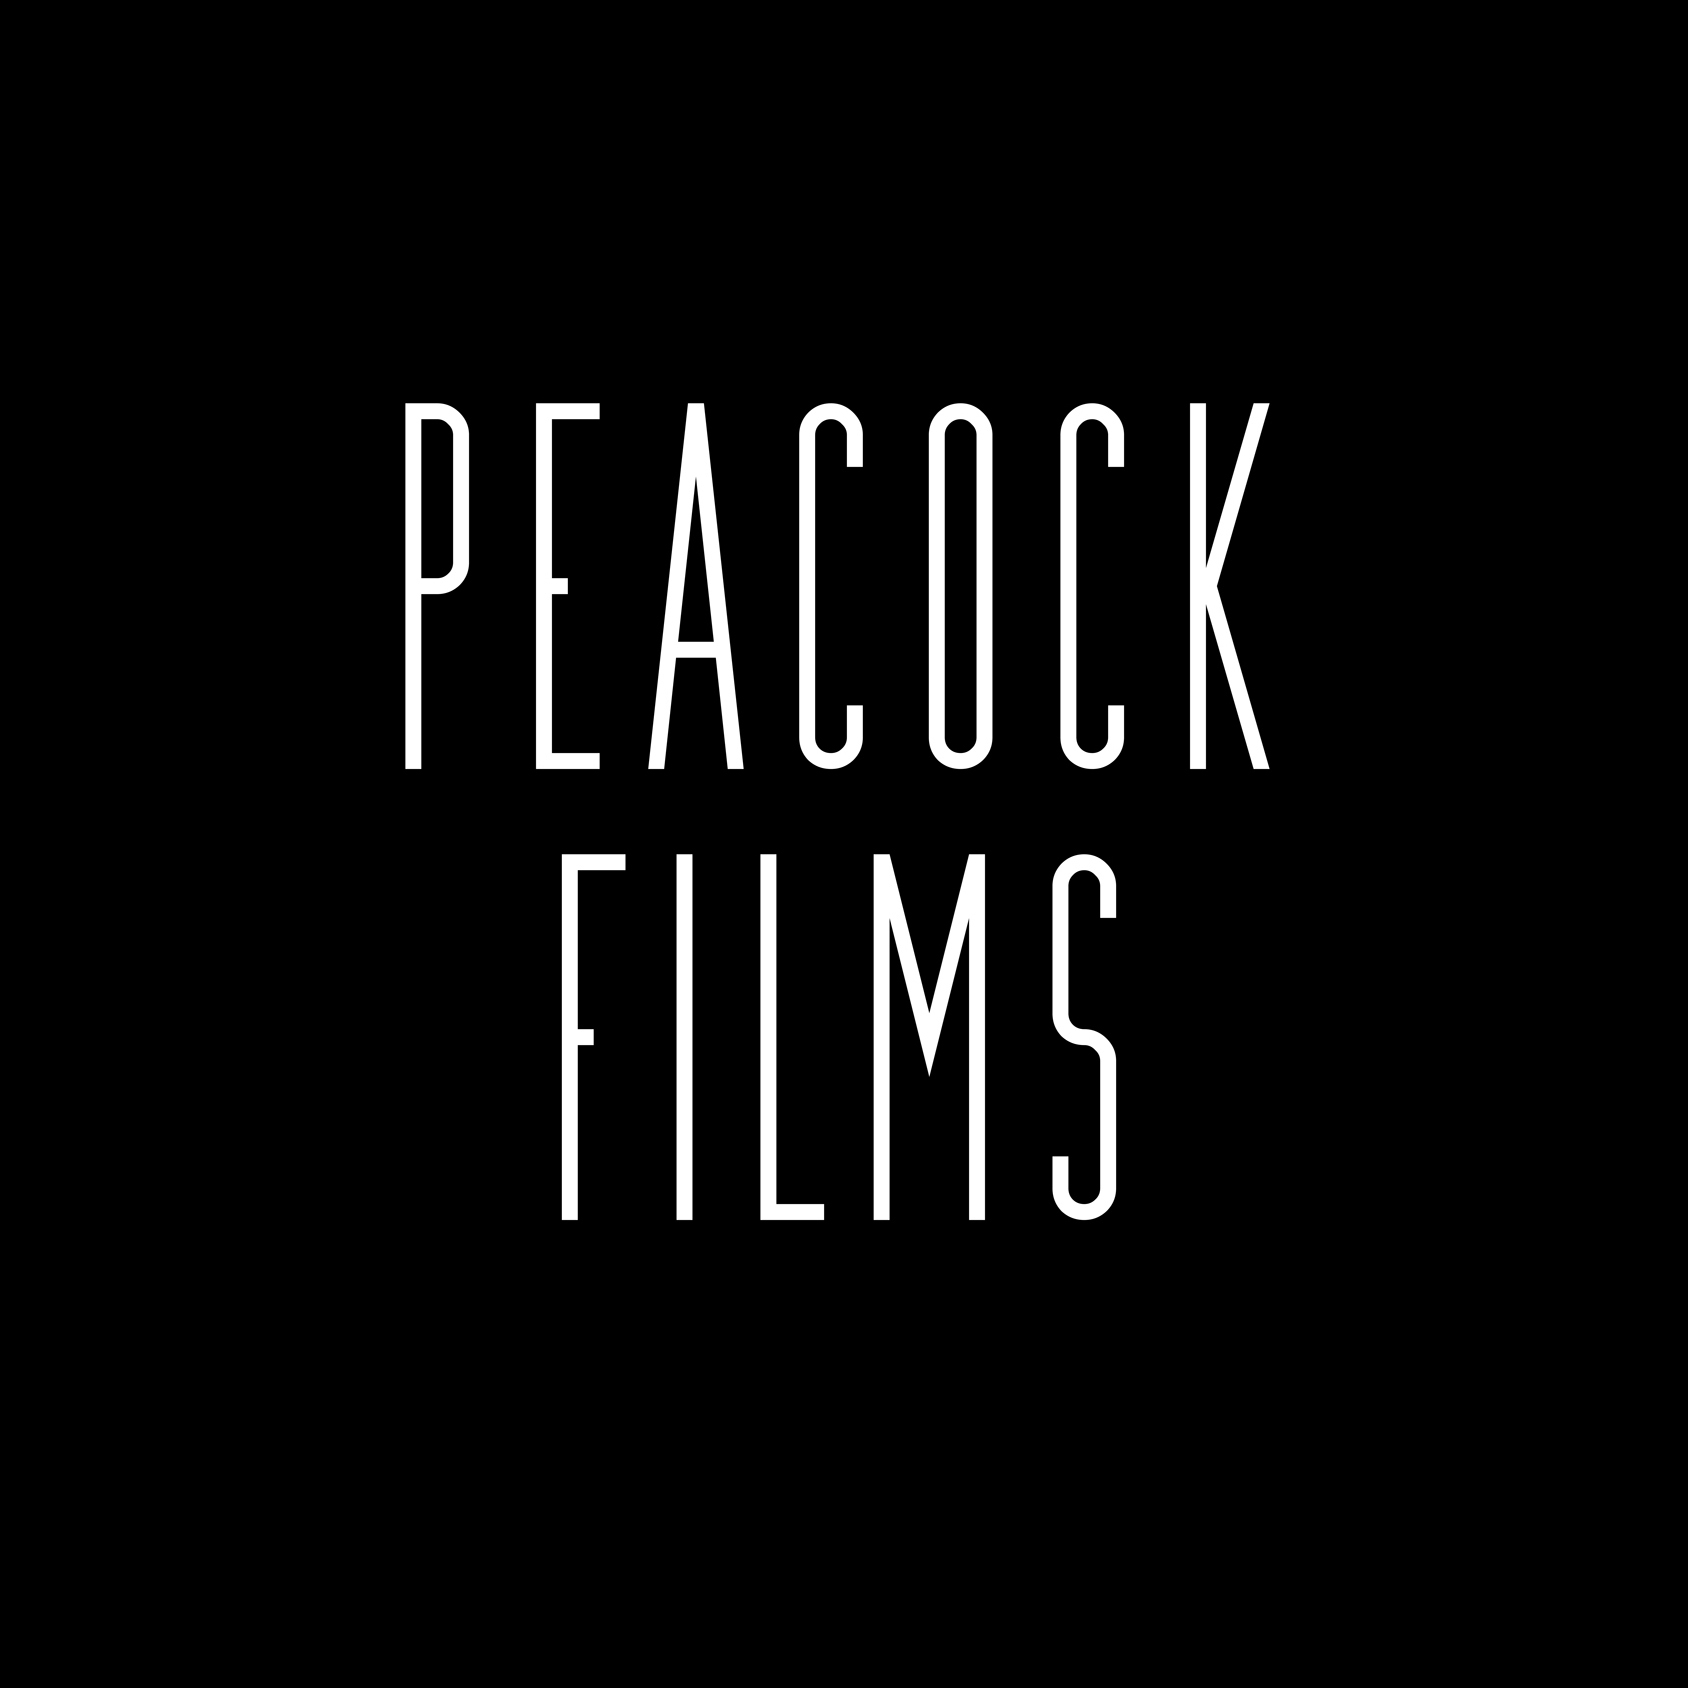 PEACOCK FILMS S.C.C.